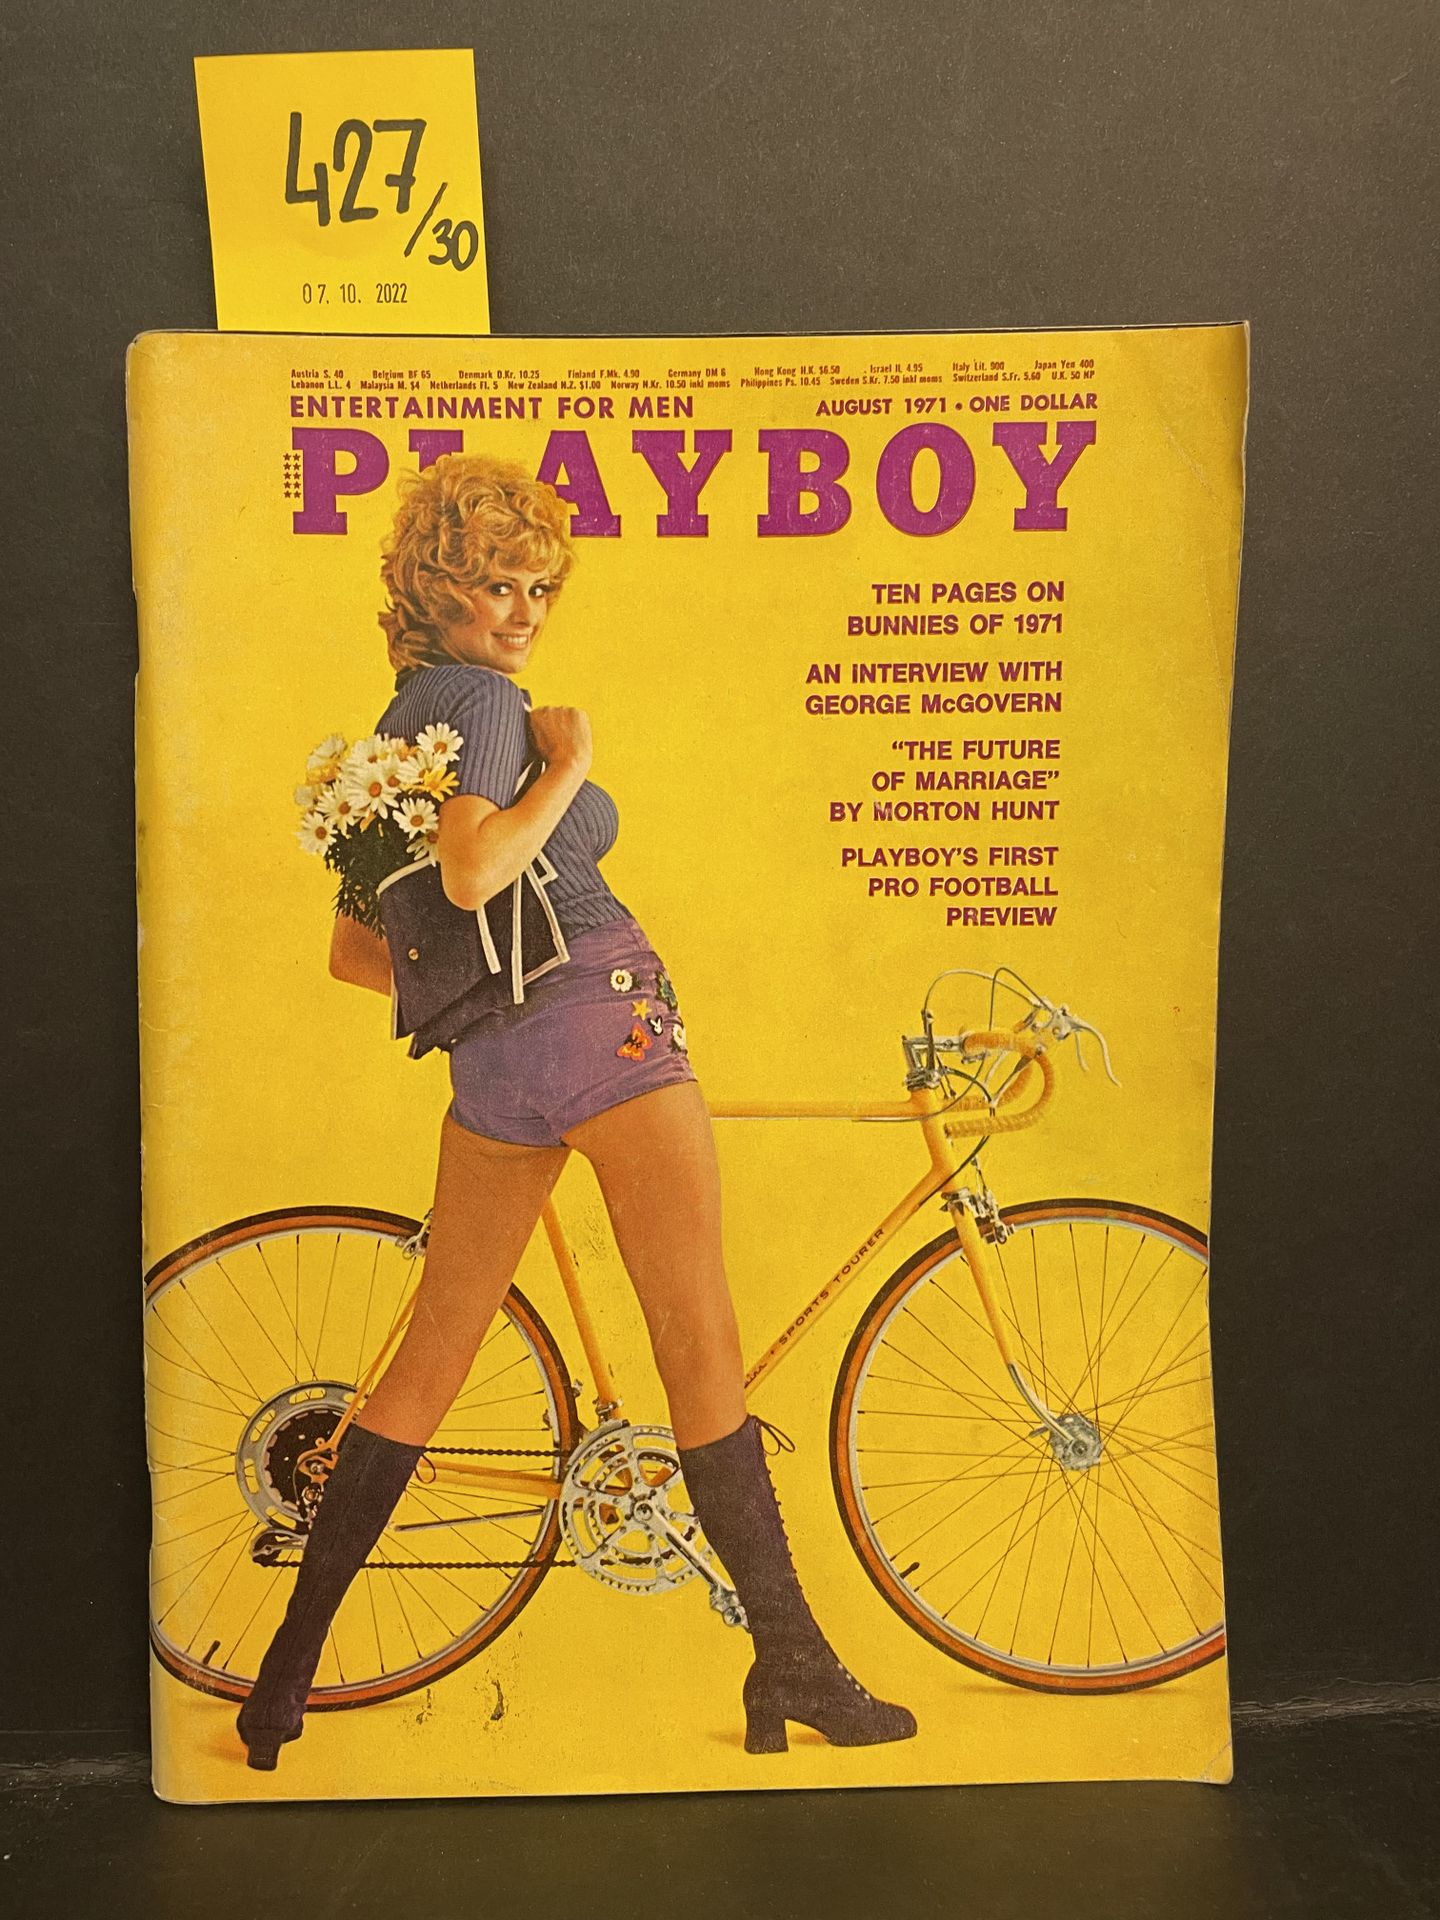 Null "Playboy". Entretenimiento para hombres. Chicago, 1959-1980, 30 vols. 4°, g&hellip;